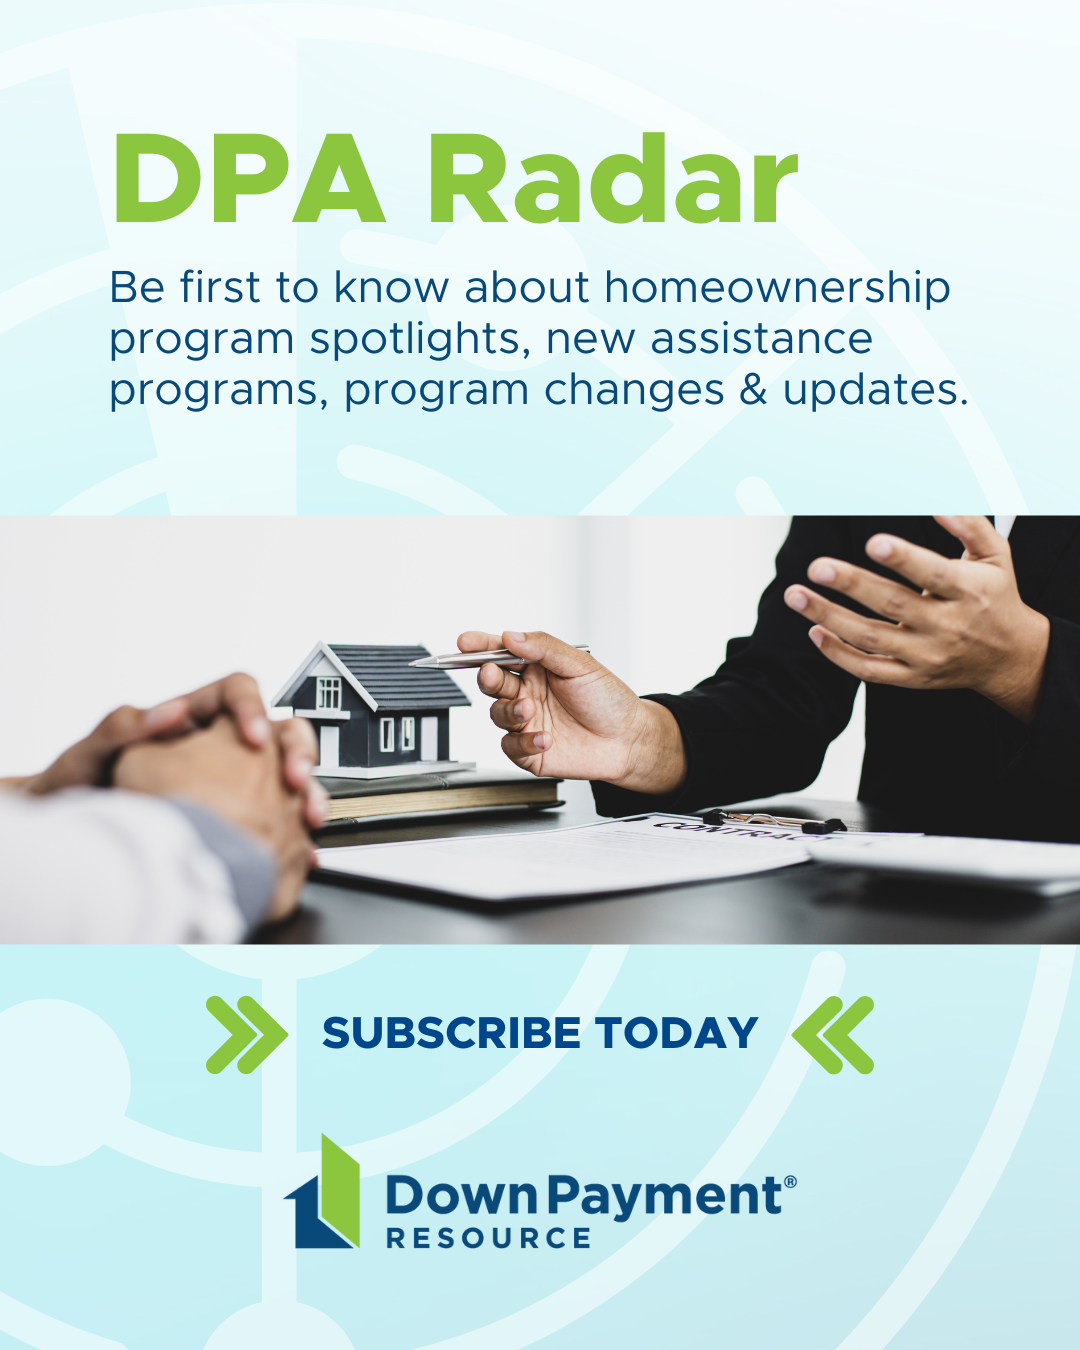 DPA Radar